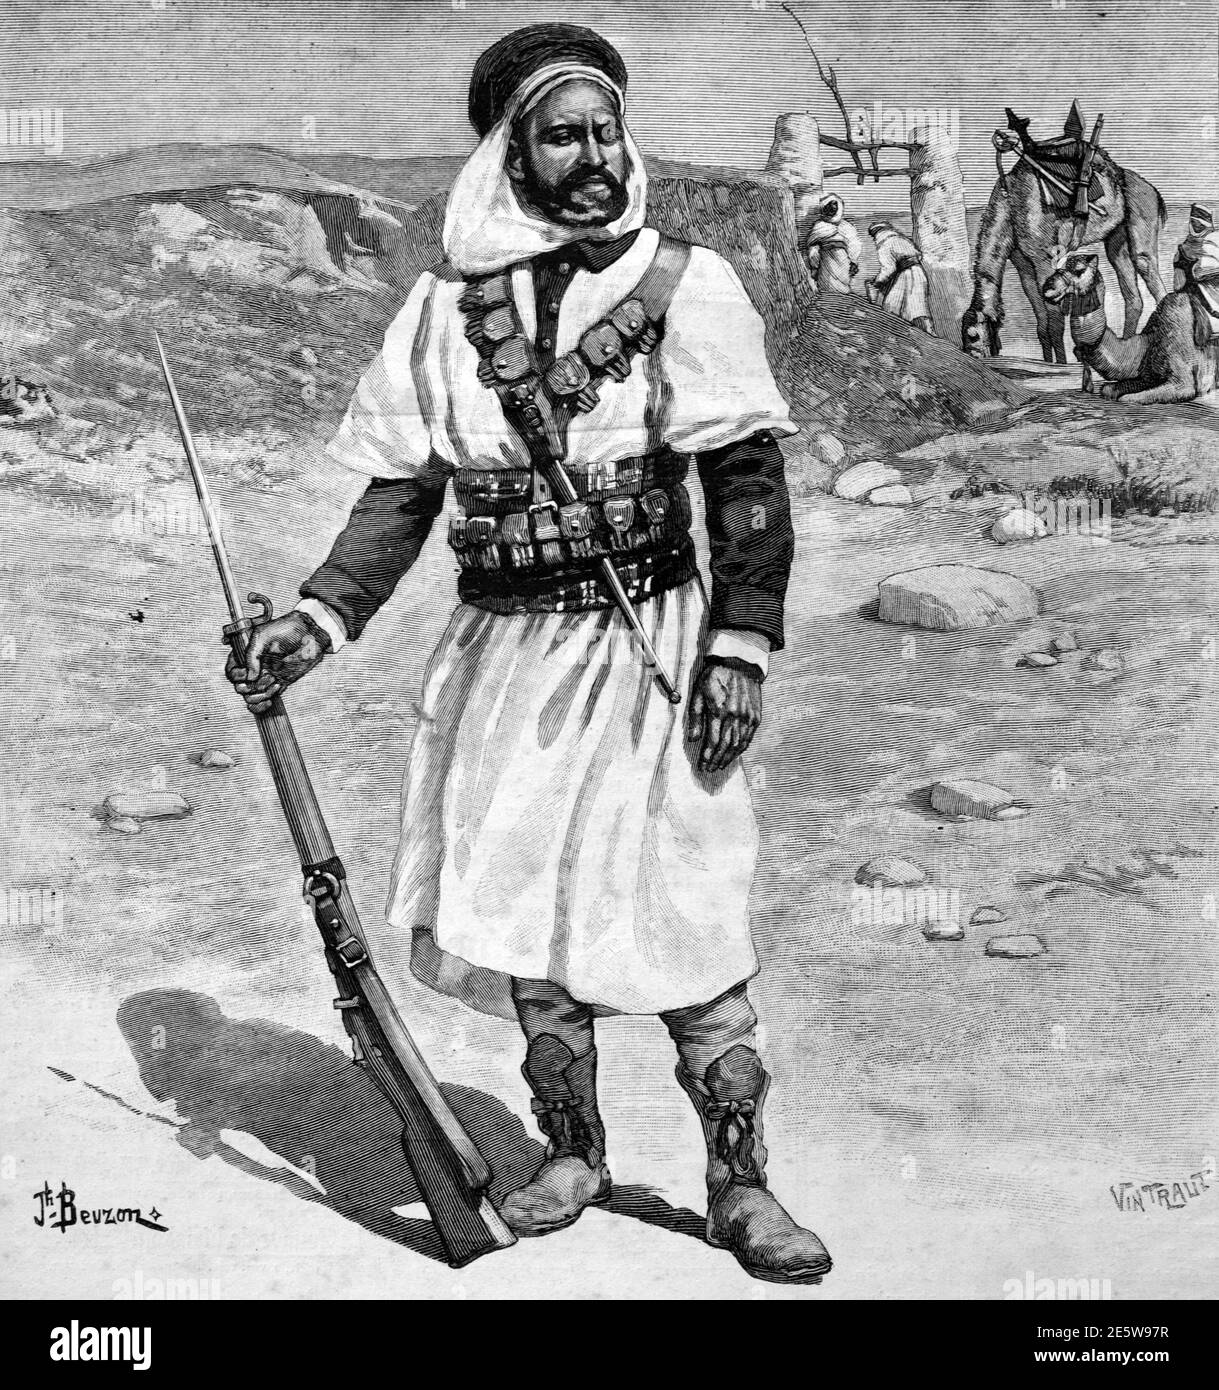 Moghazni oder Mokhazni Französischer kolonialer Hilfssoldat Nordafrika 1904 Vintage Illustration oder Gravur Stockfoto